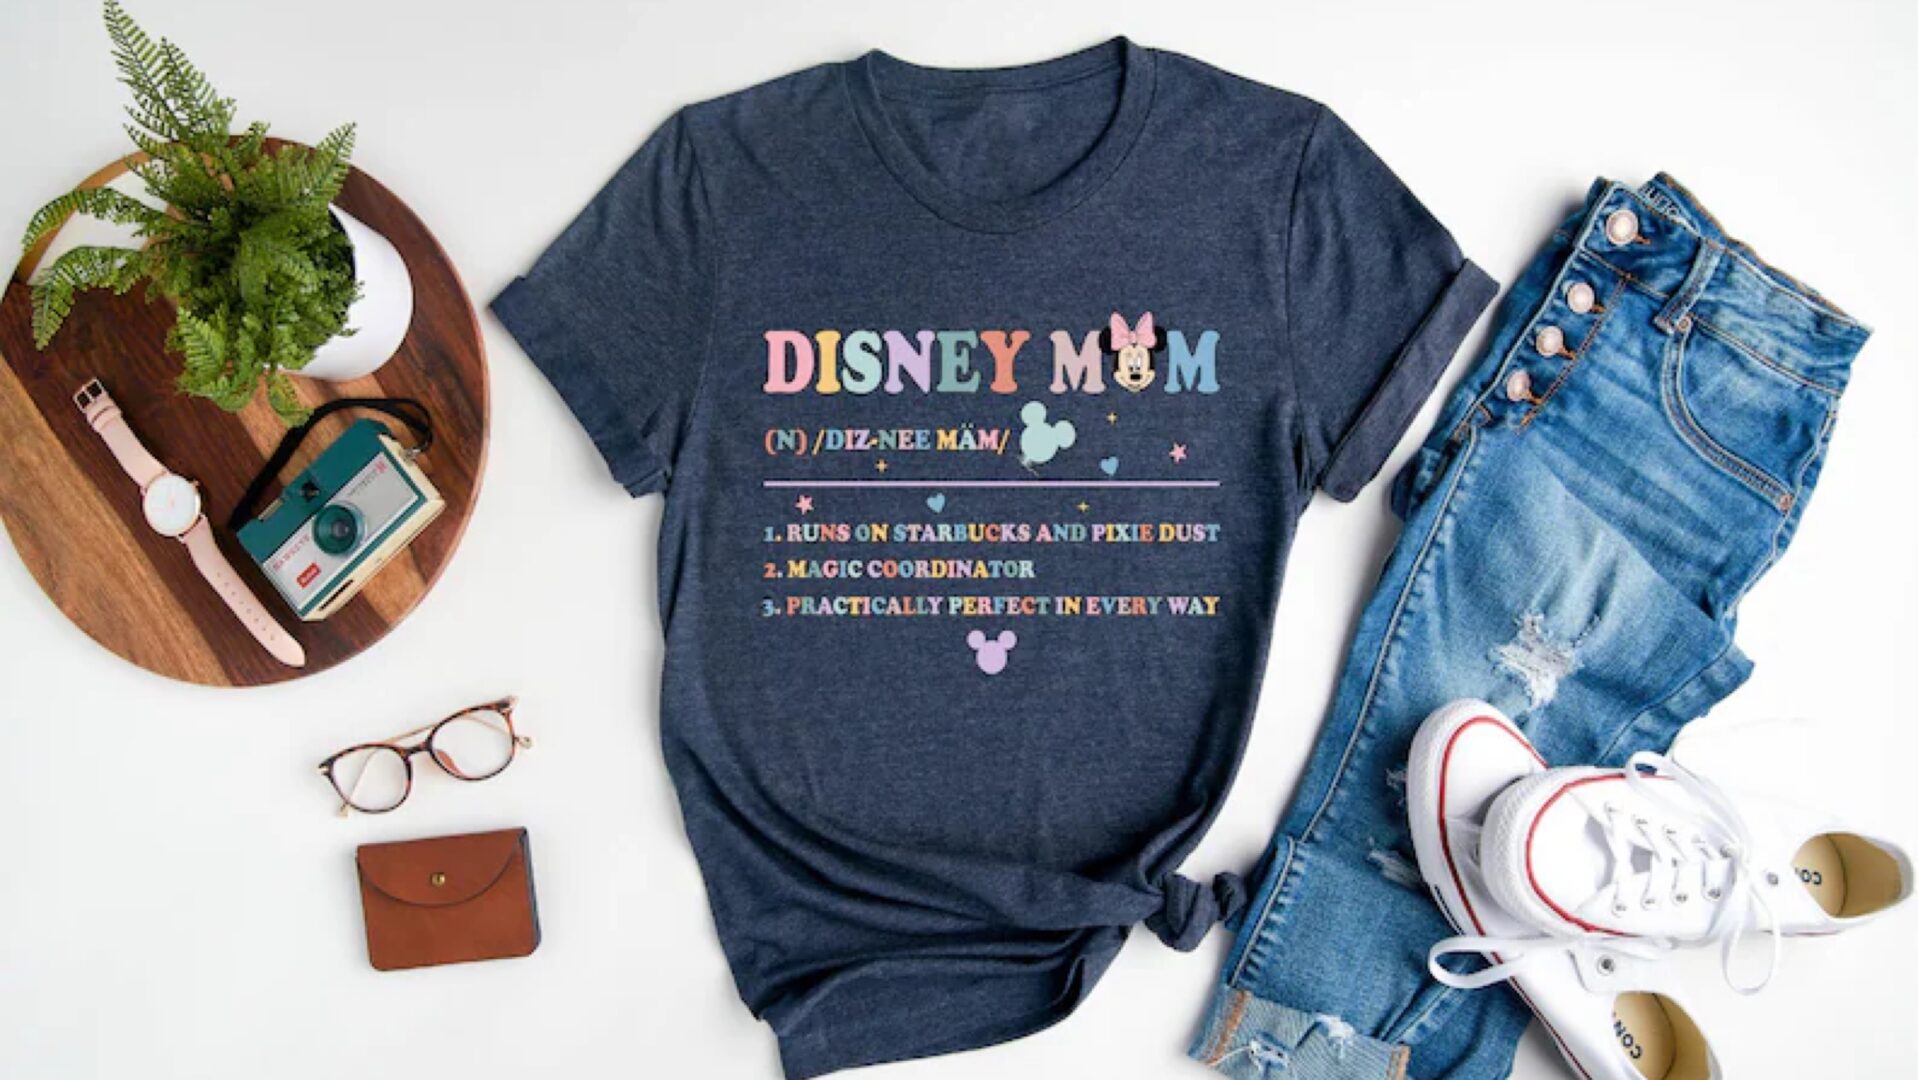 Disney Mom T-Shirt For Your Next Disney Vacation!